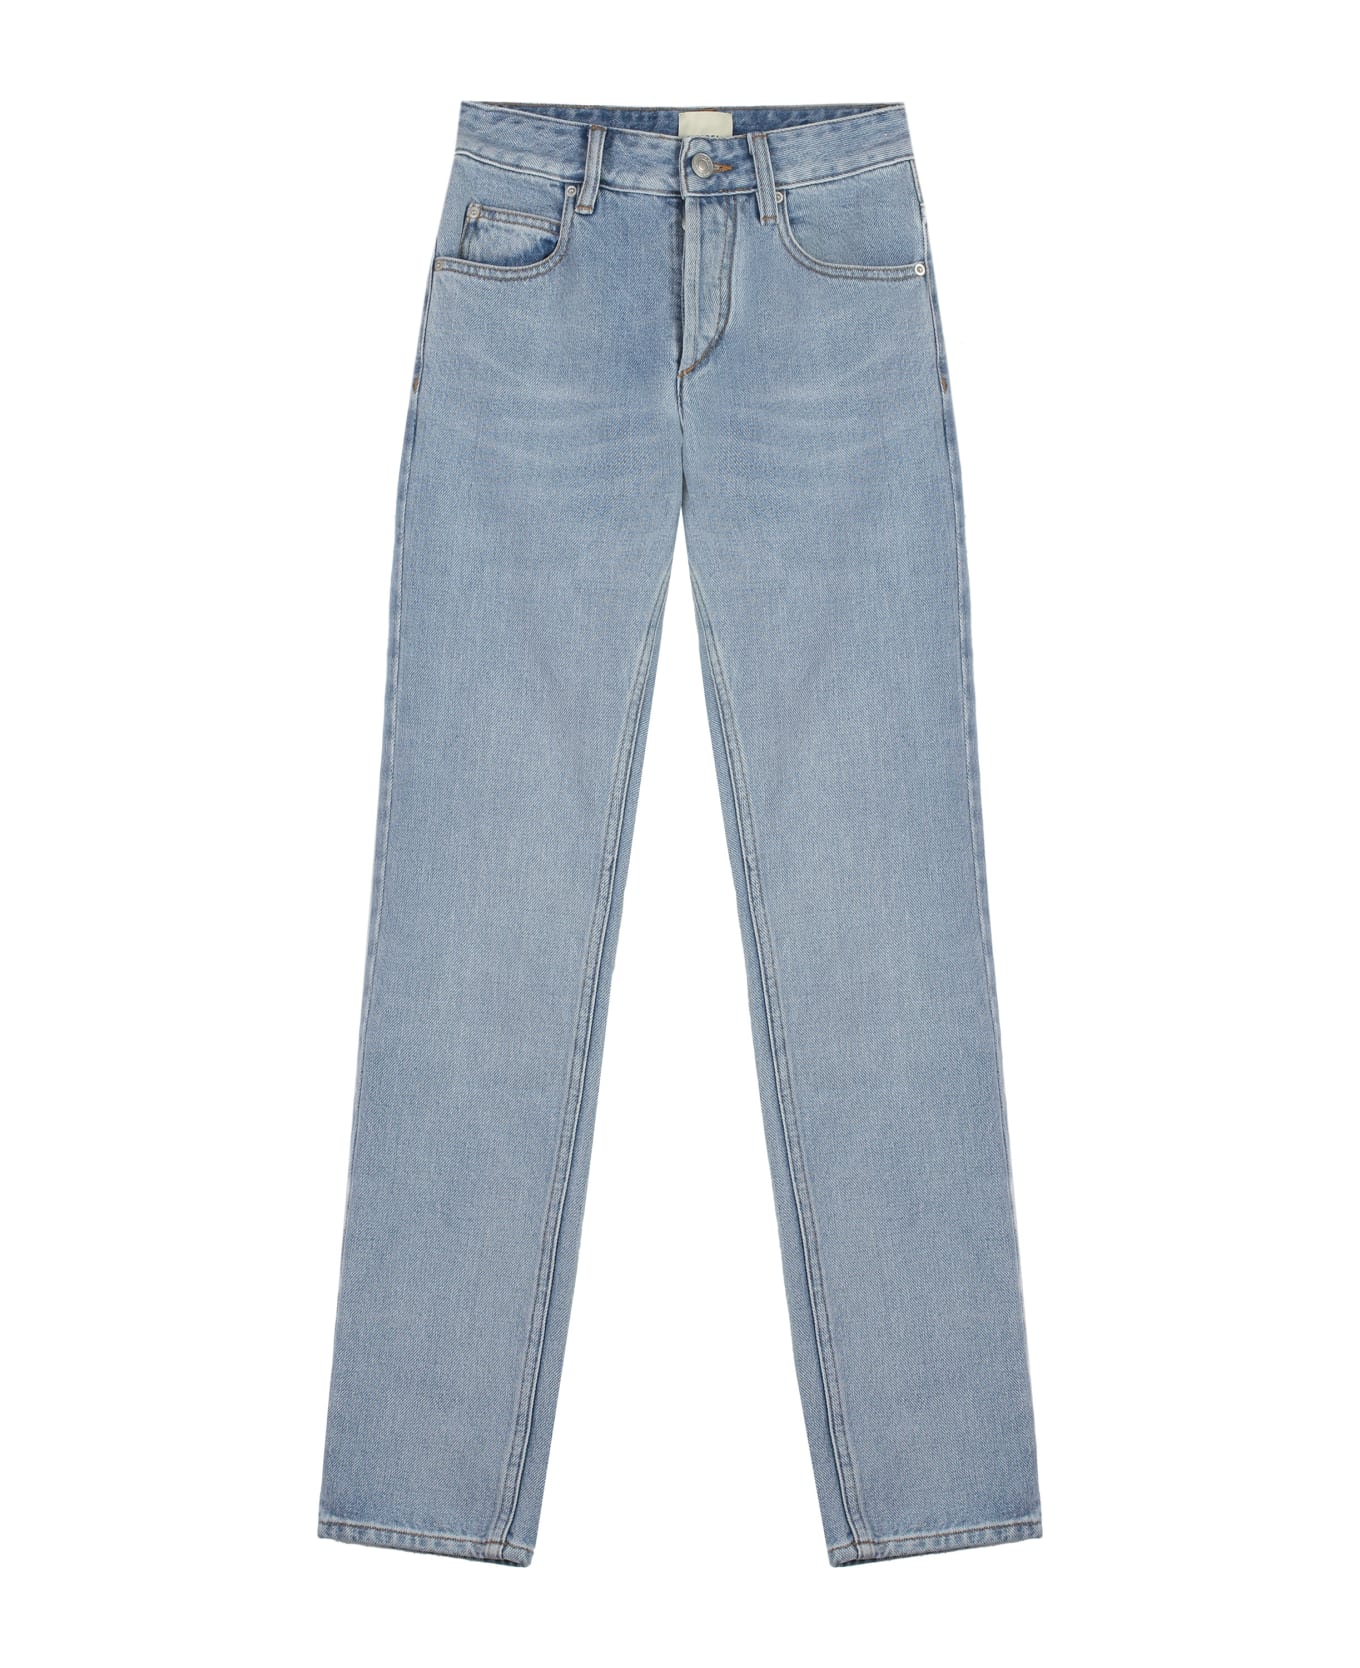 Isabel Marant Jiliana High-rise Skinny-fit Jeans - Denim